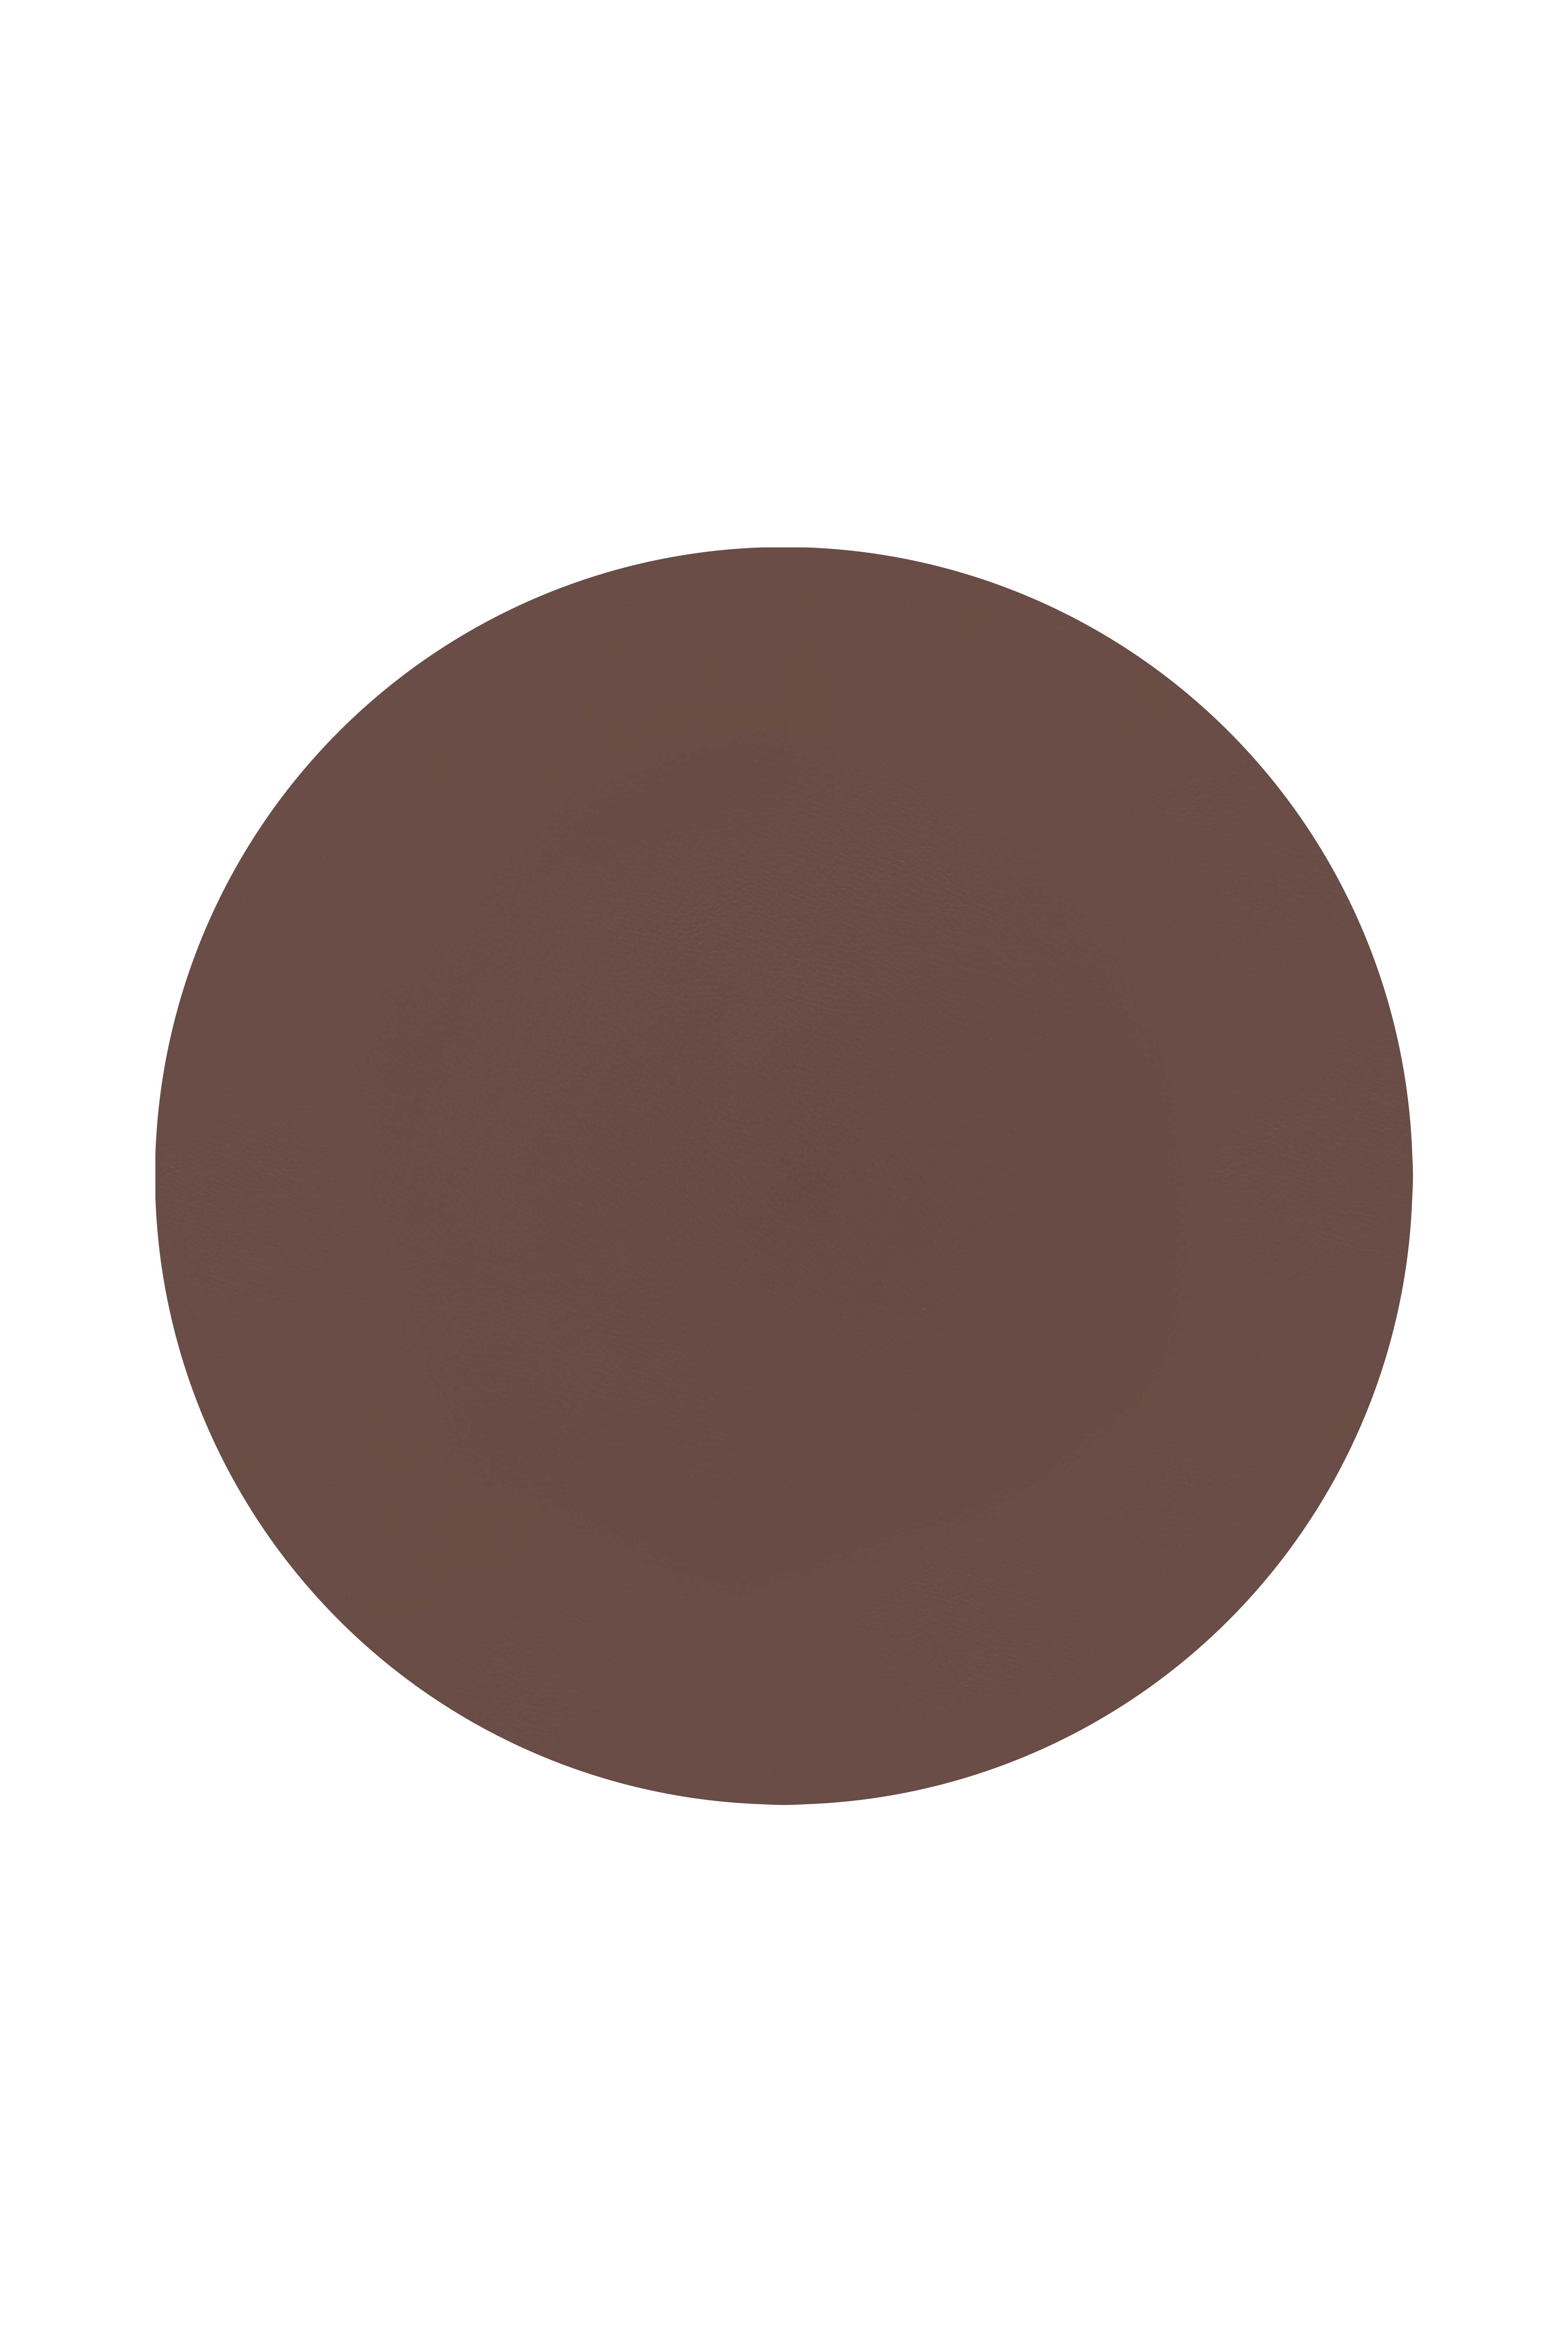 Placemat round - TOGO - 38cm, brown